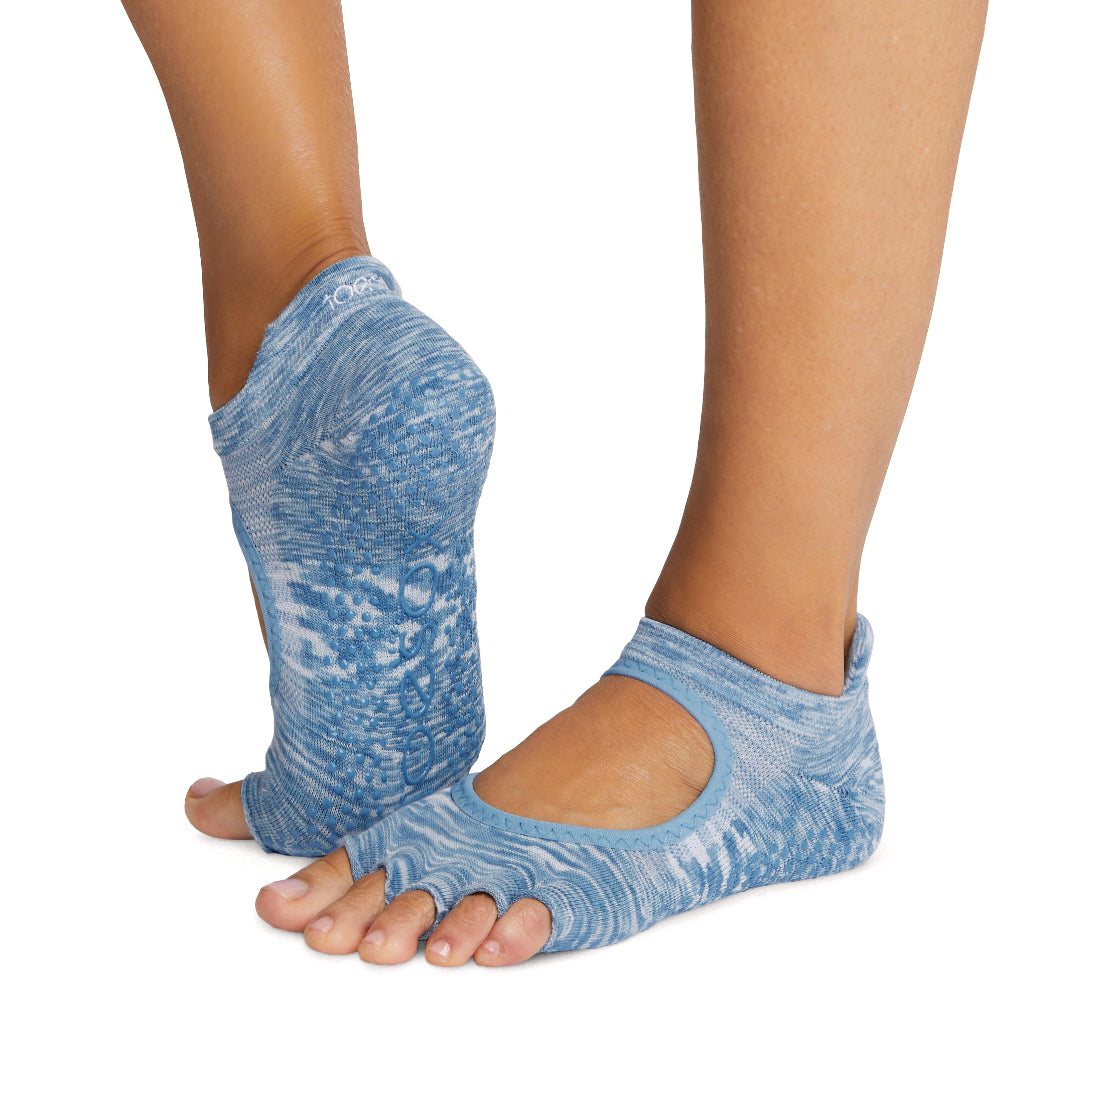 Half Toe Bellarina Tec Grip Socks – ToeSox, Tavi